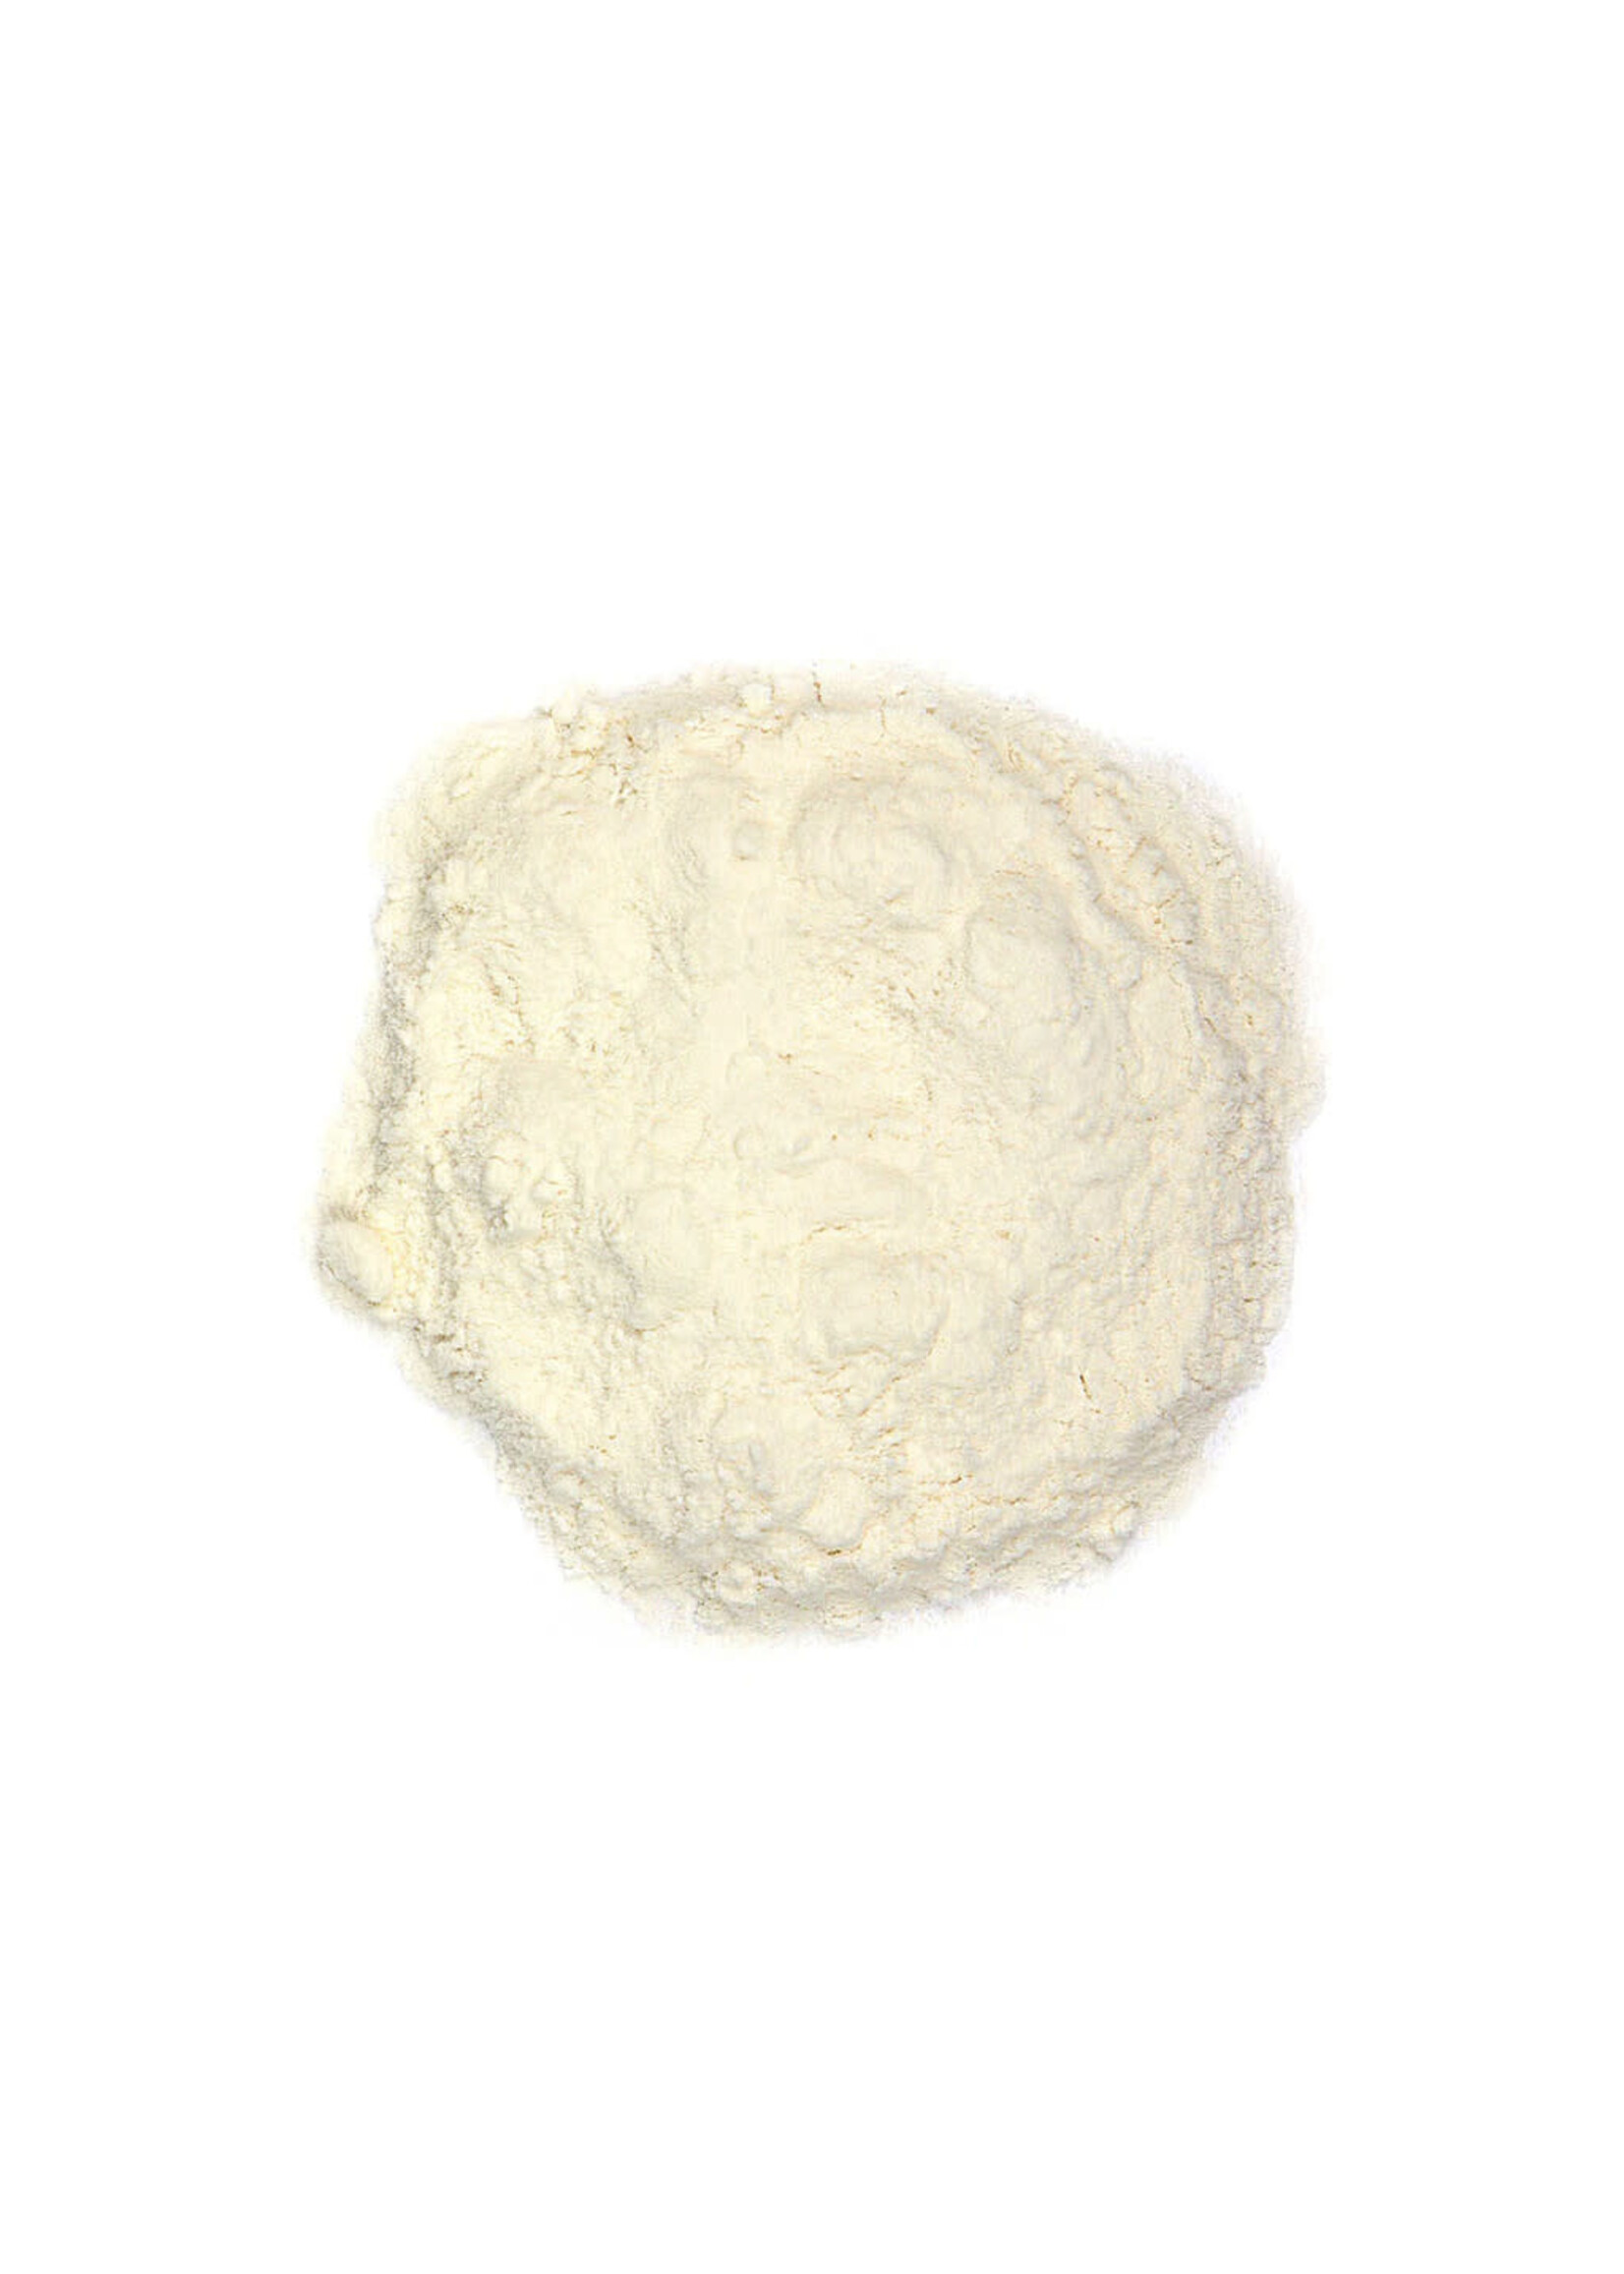 Organic Acacia Powder - Sold Per Ounce